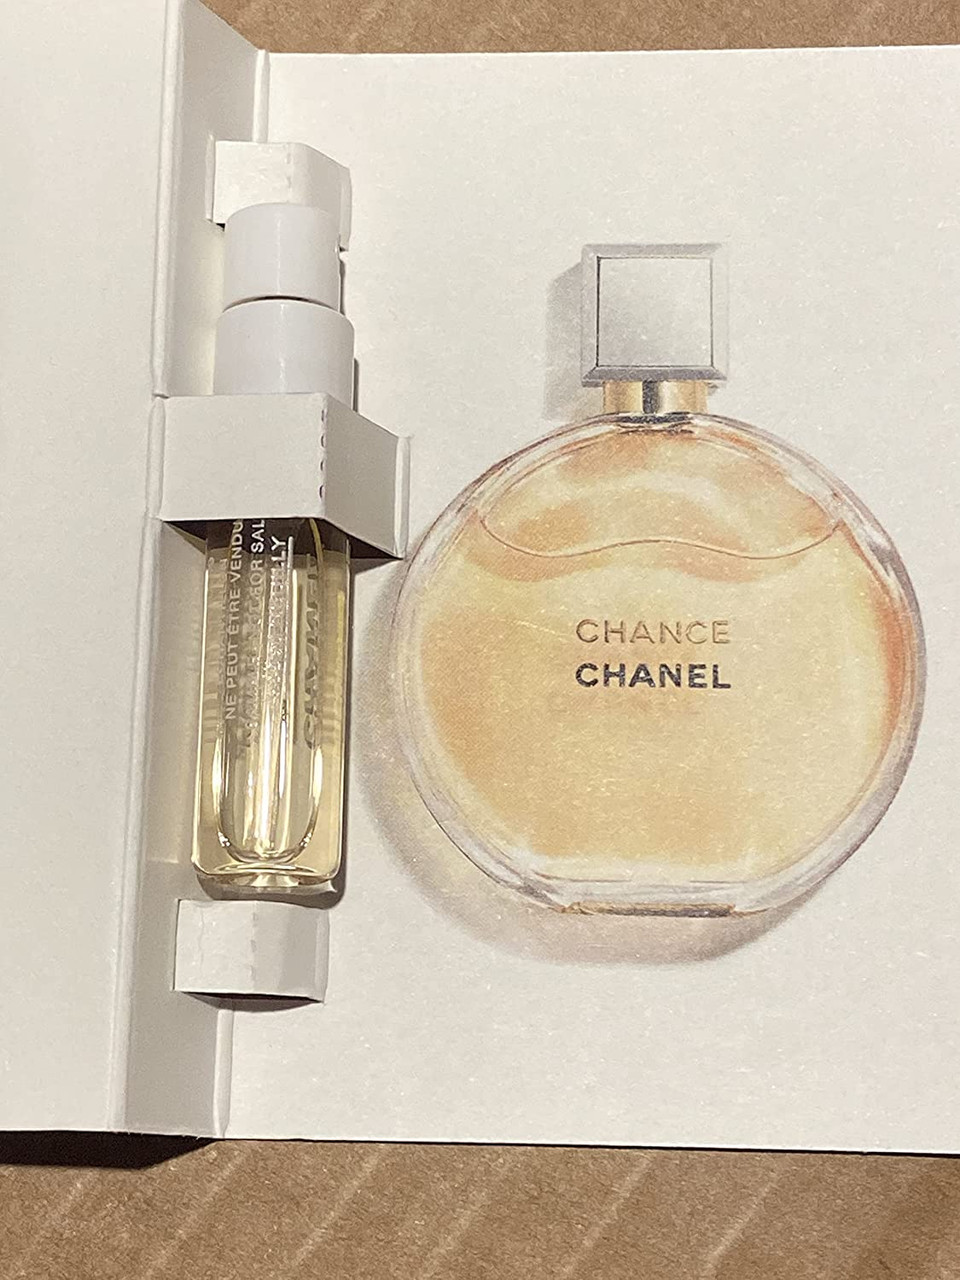  Chance Eau De Parfum Spray 0.06 Oz Vial by Chanel for Women :  Beauty & Personal Care